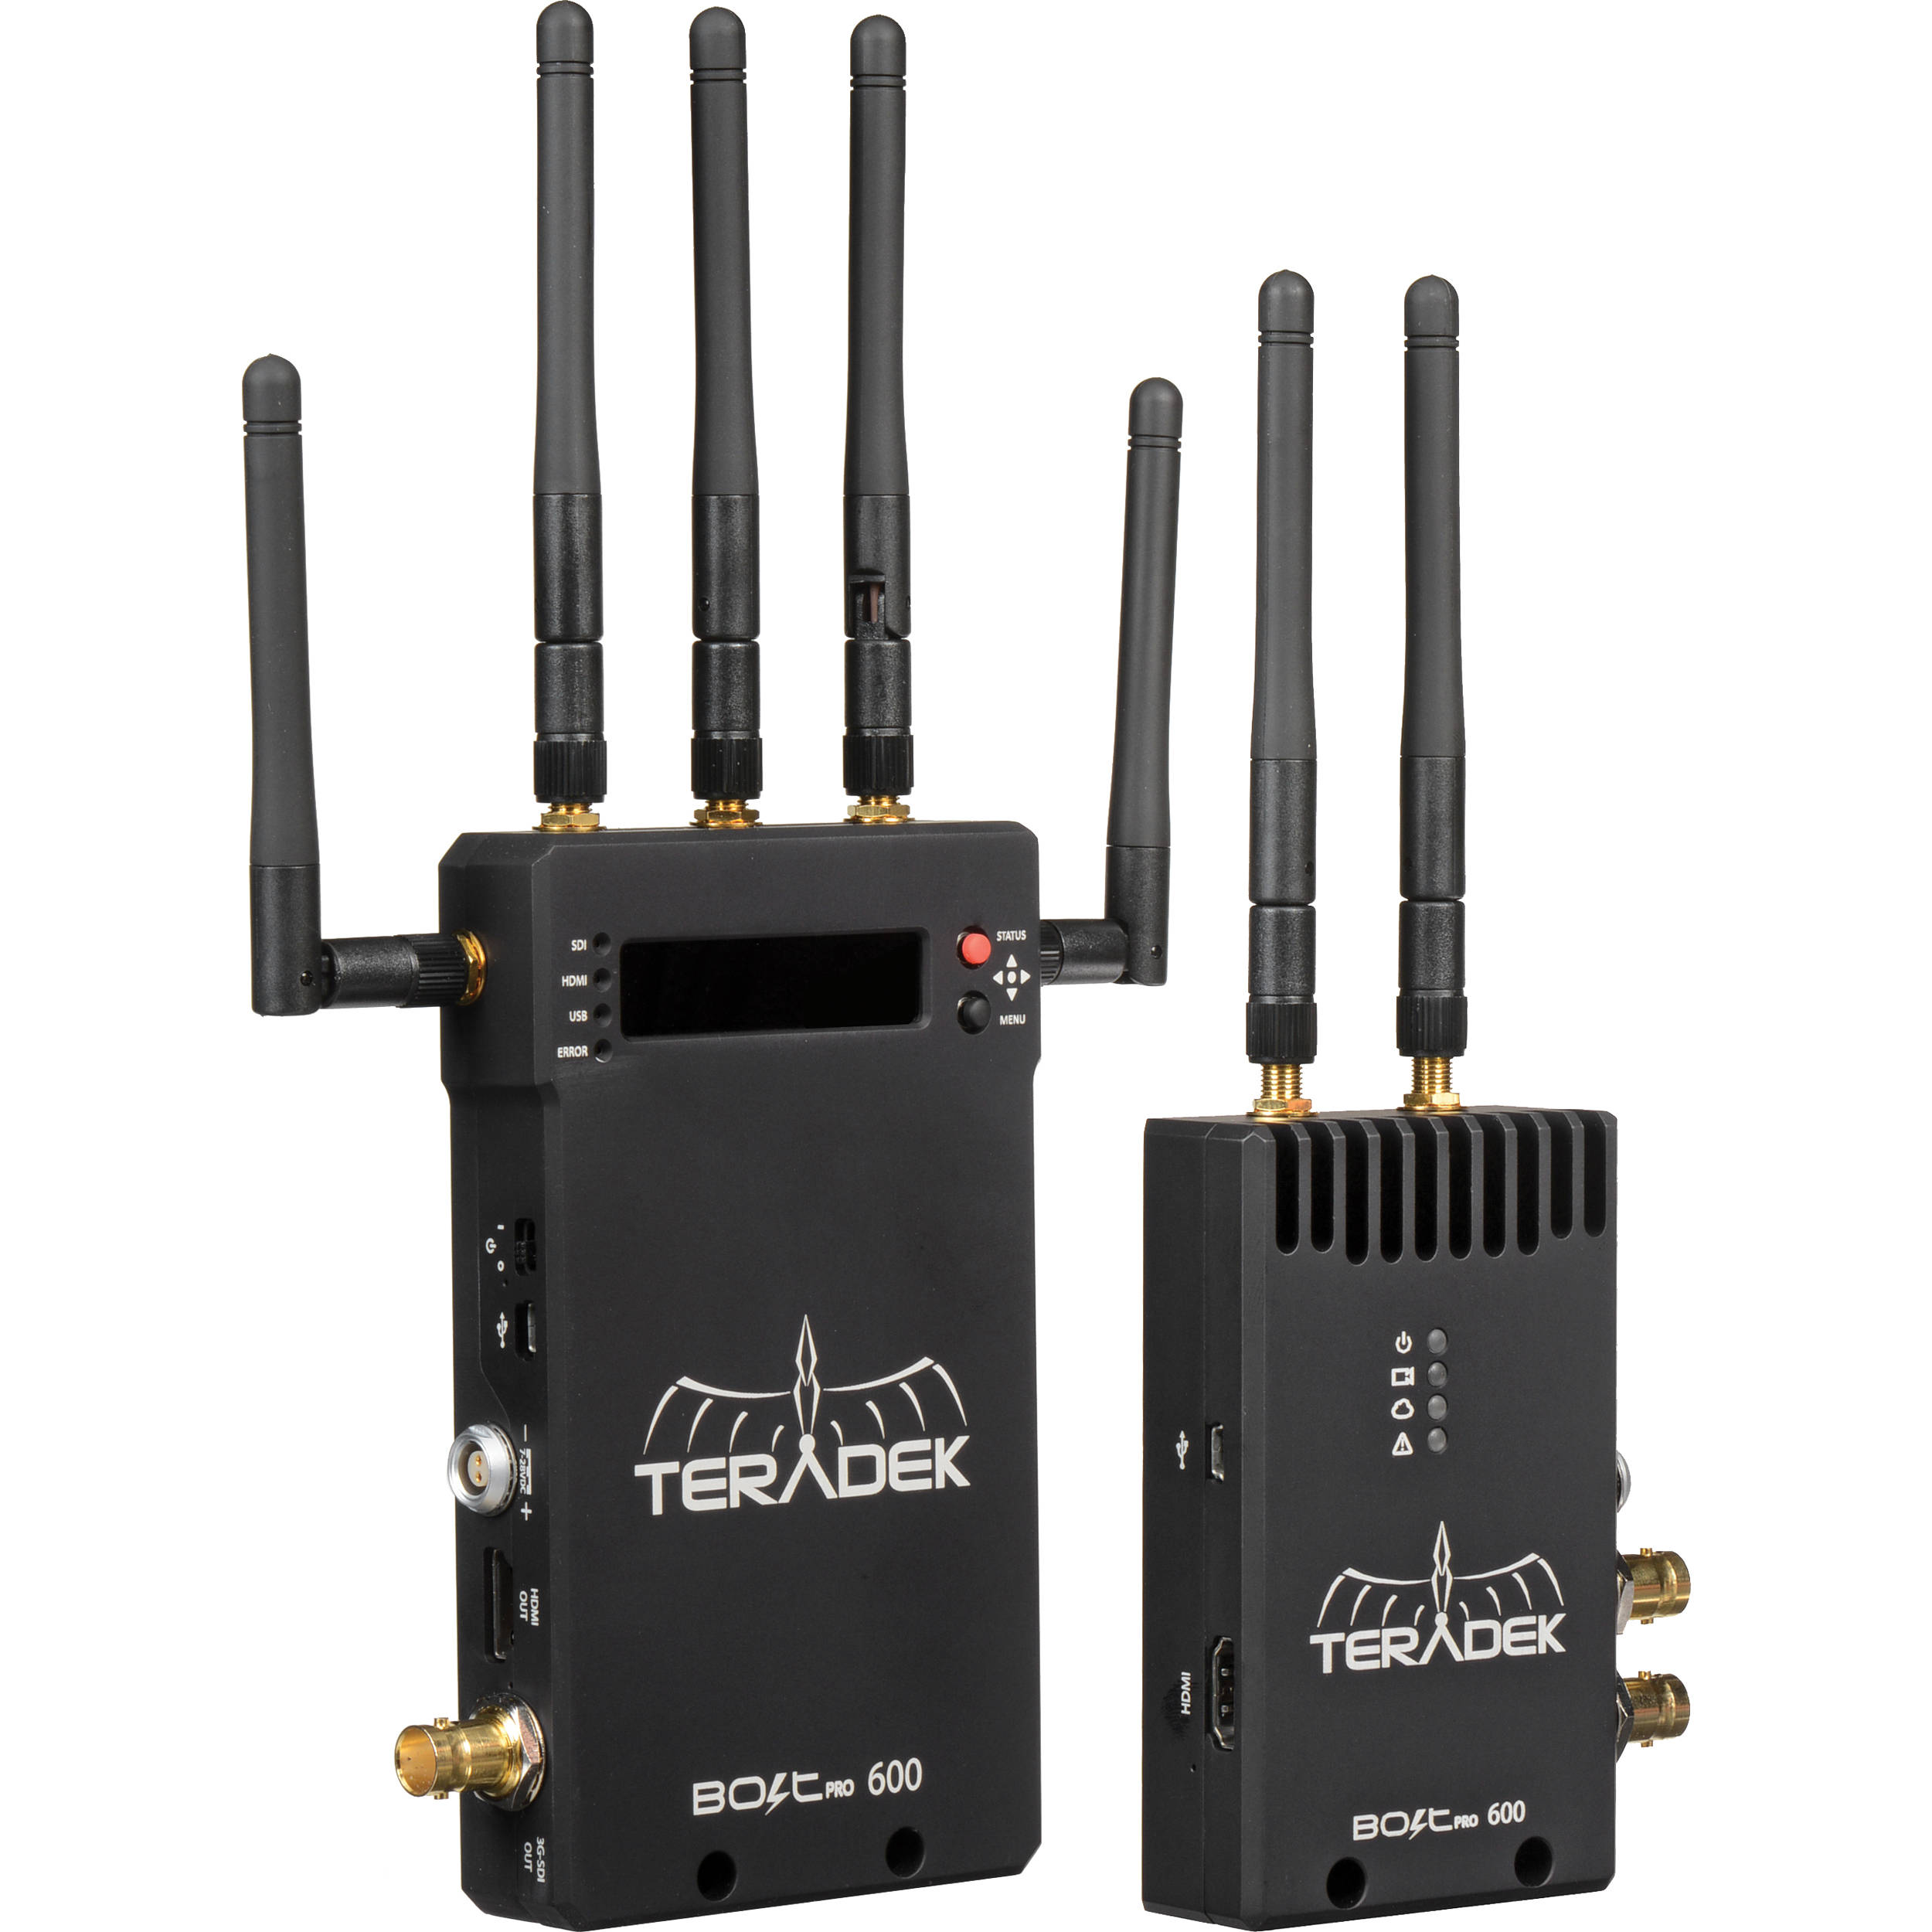 TERADEK bolt Pro 600 Wireless HD-SDI / HDMI Dual Transmitter / Receiver Set